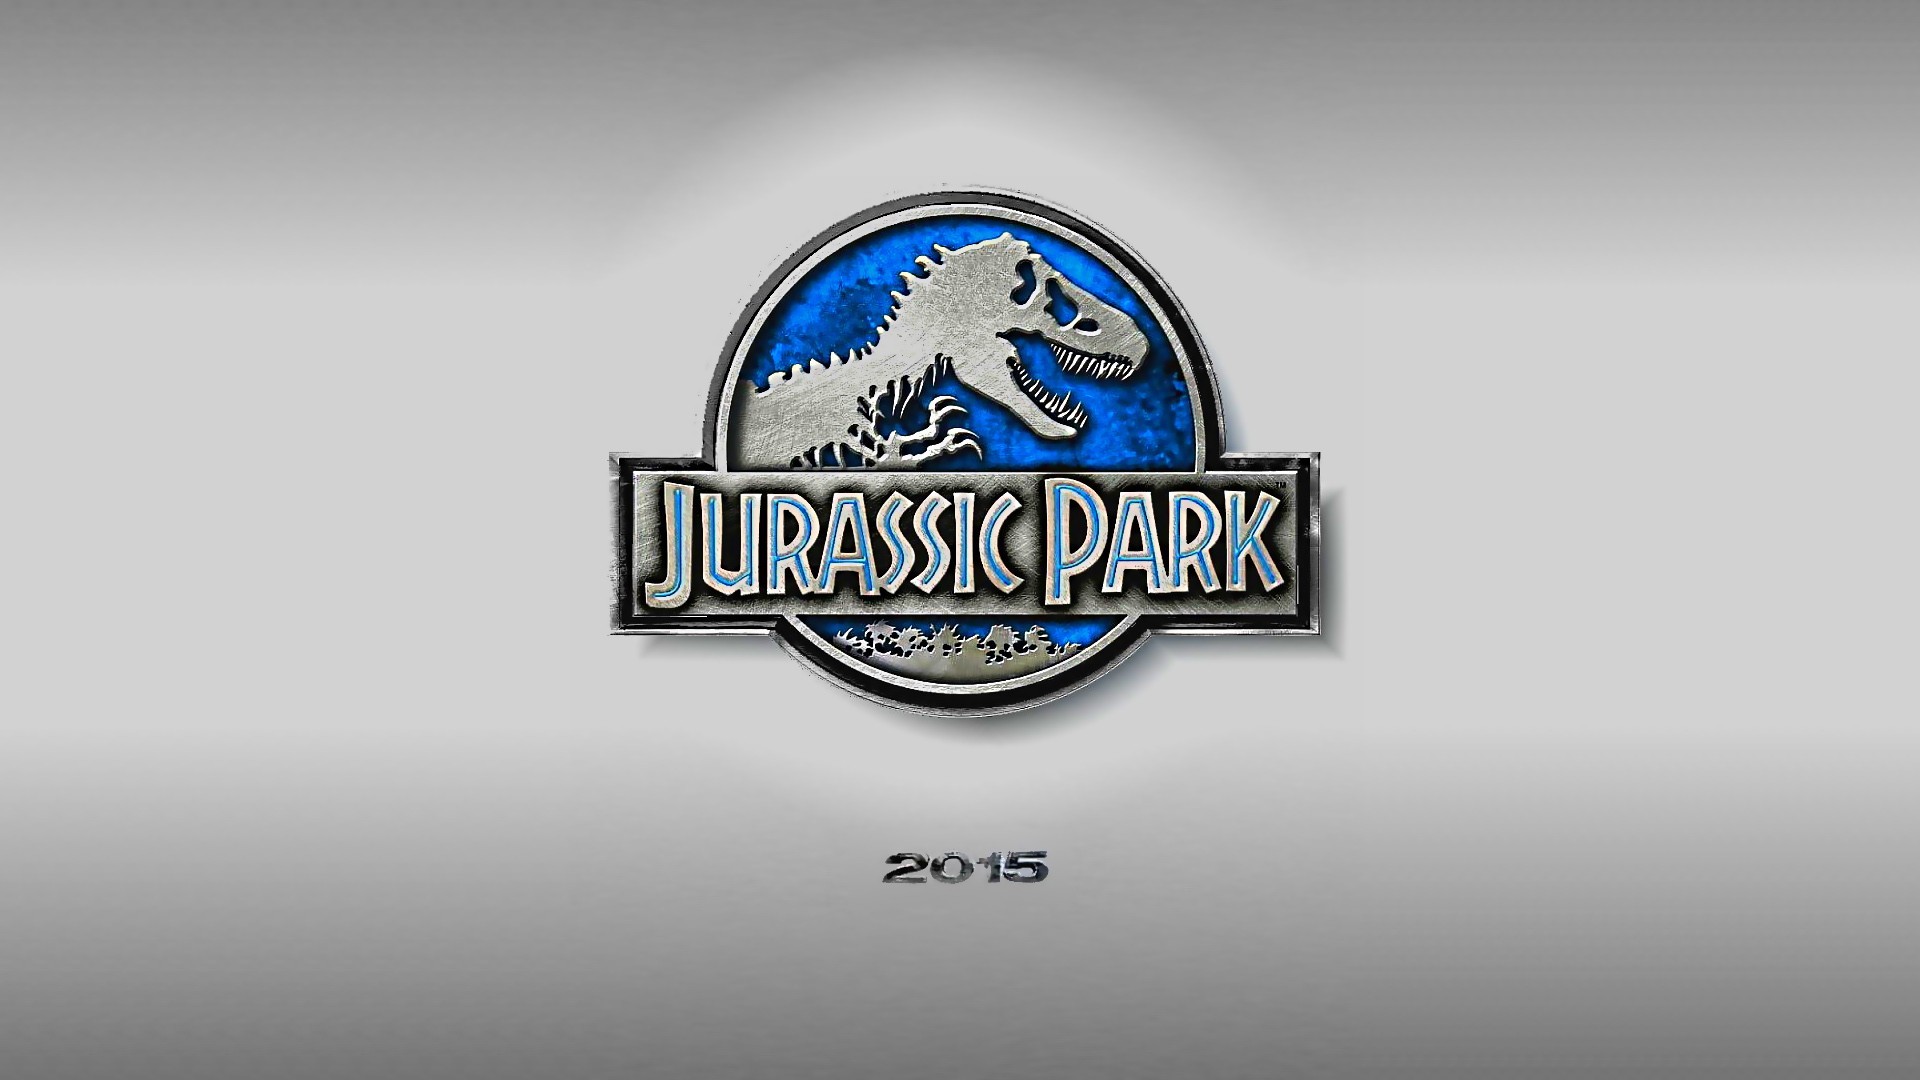 1920x1080 ... x 1080 Original. Description: Download Jurassic Park 4 2015 Movies  wallpaper ...